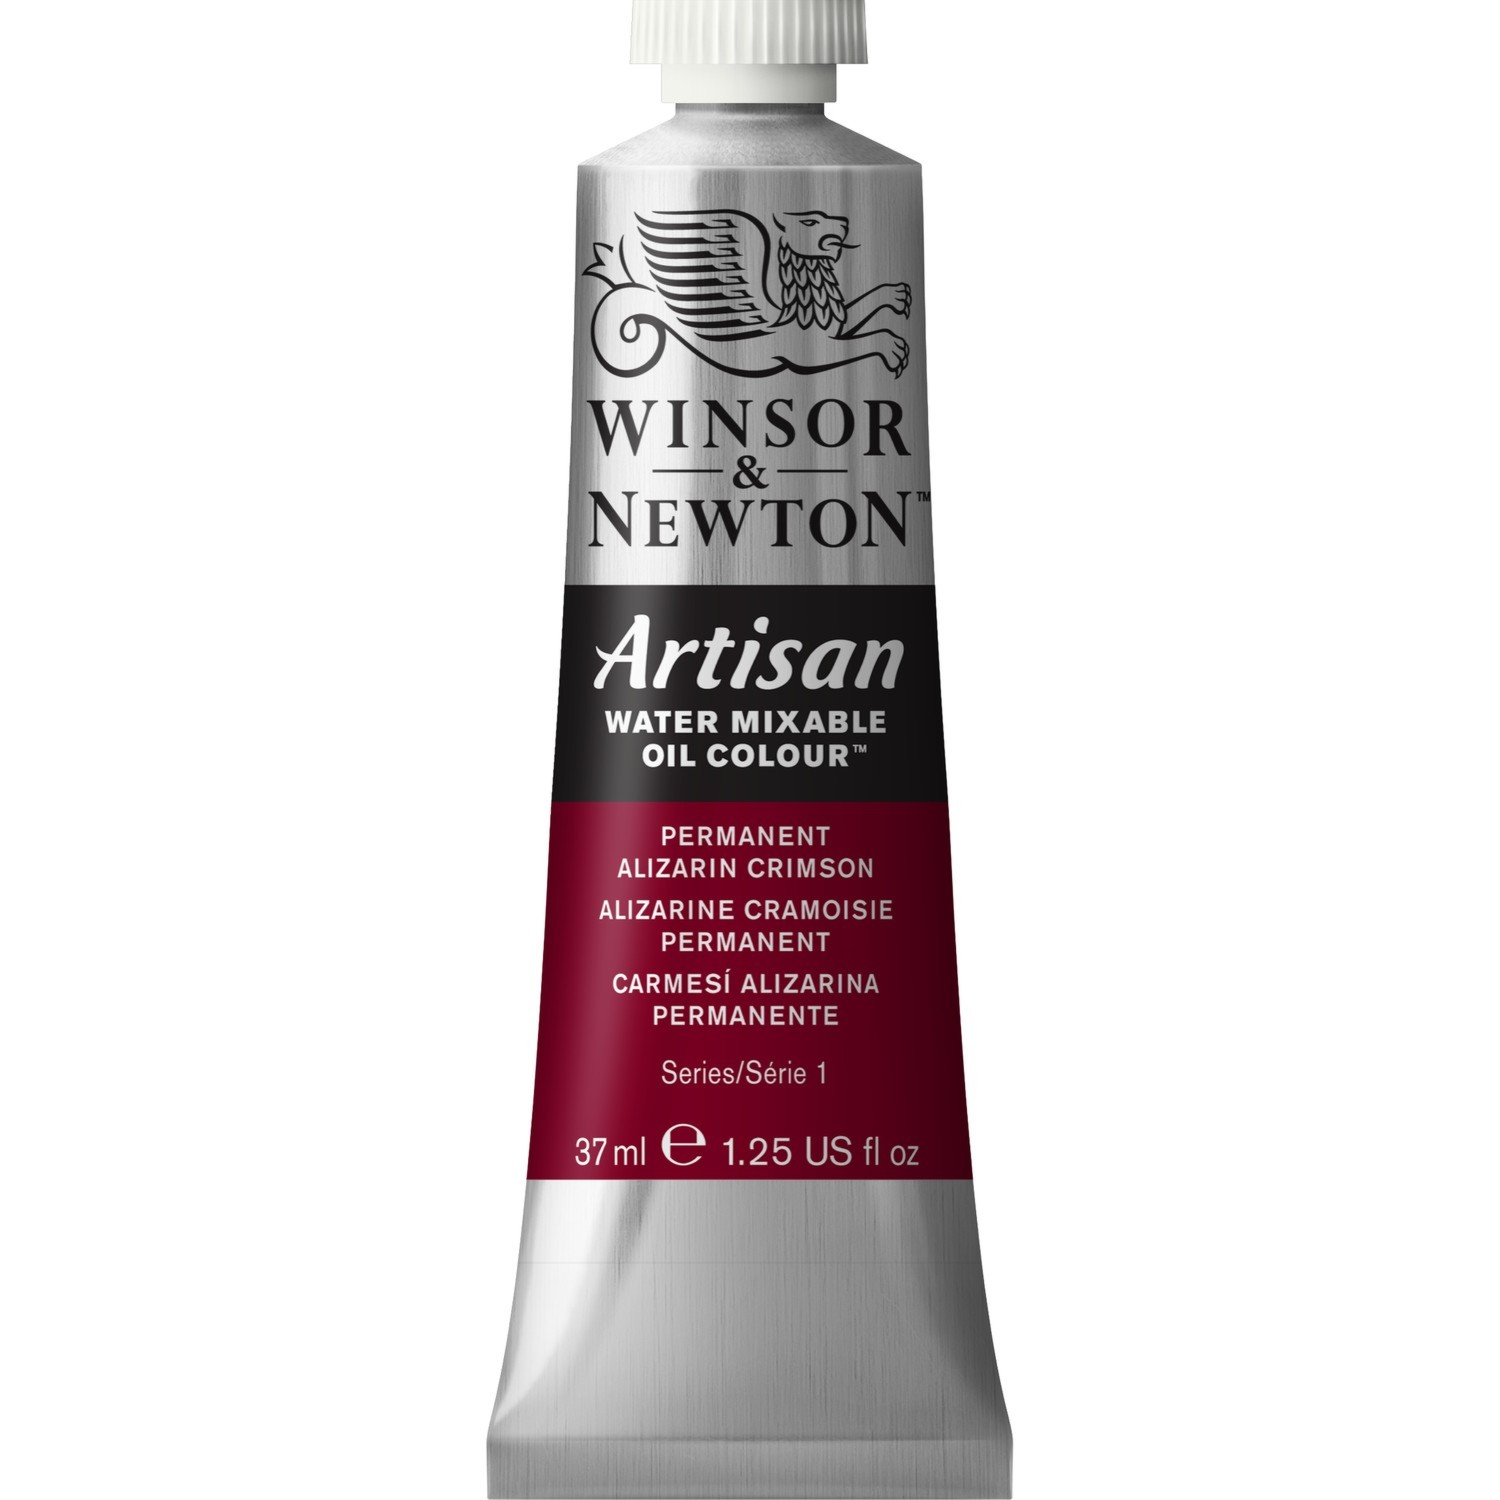 Winsor and Newton 37ml Artisan Mixable Oil Paint - Alizarin Crimson Image 1